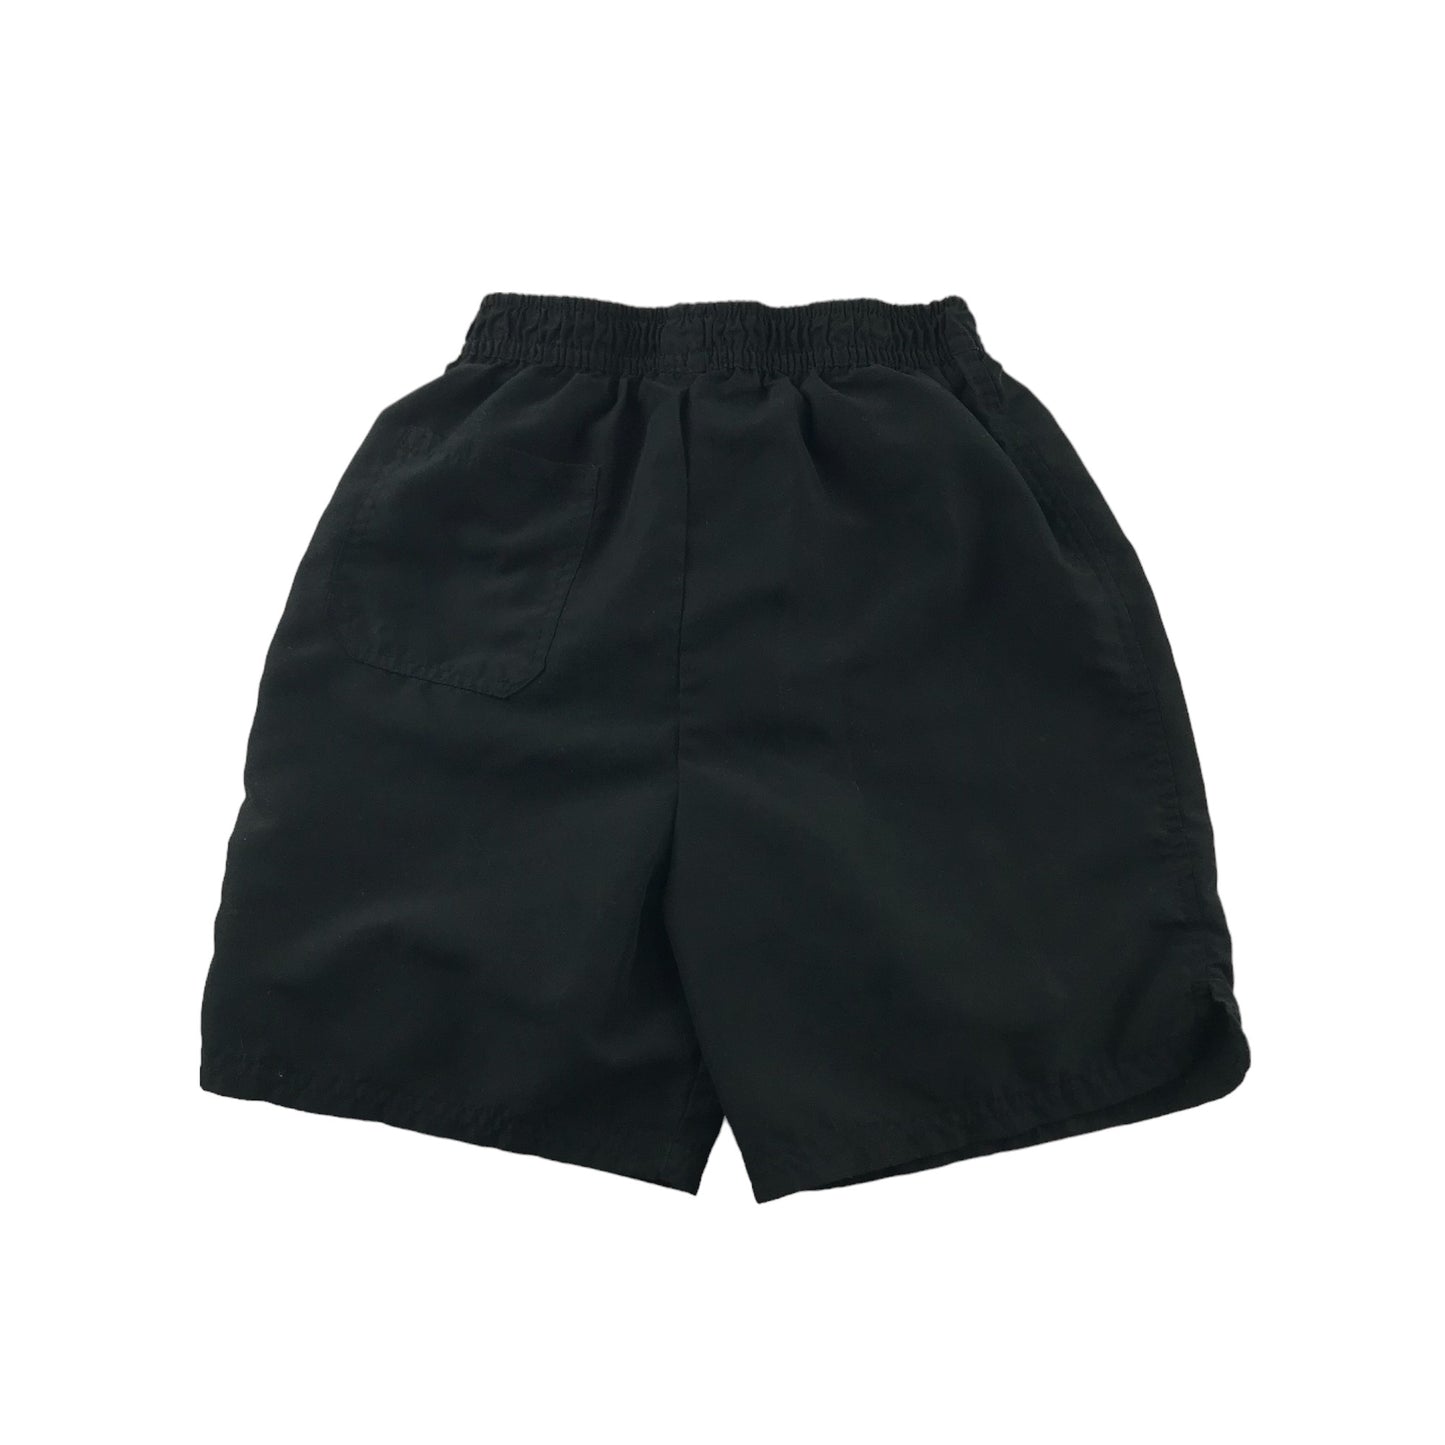 George Swim Trunks Age 8 Black Plain Design Shorts